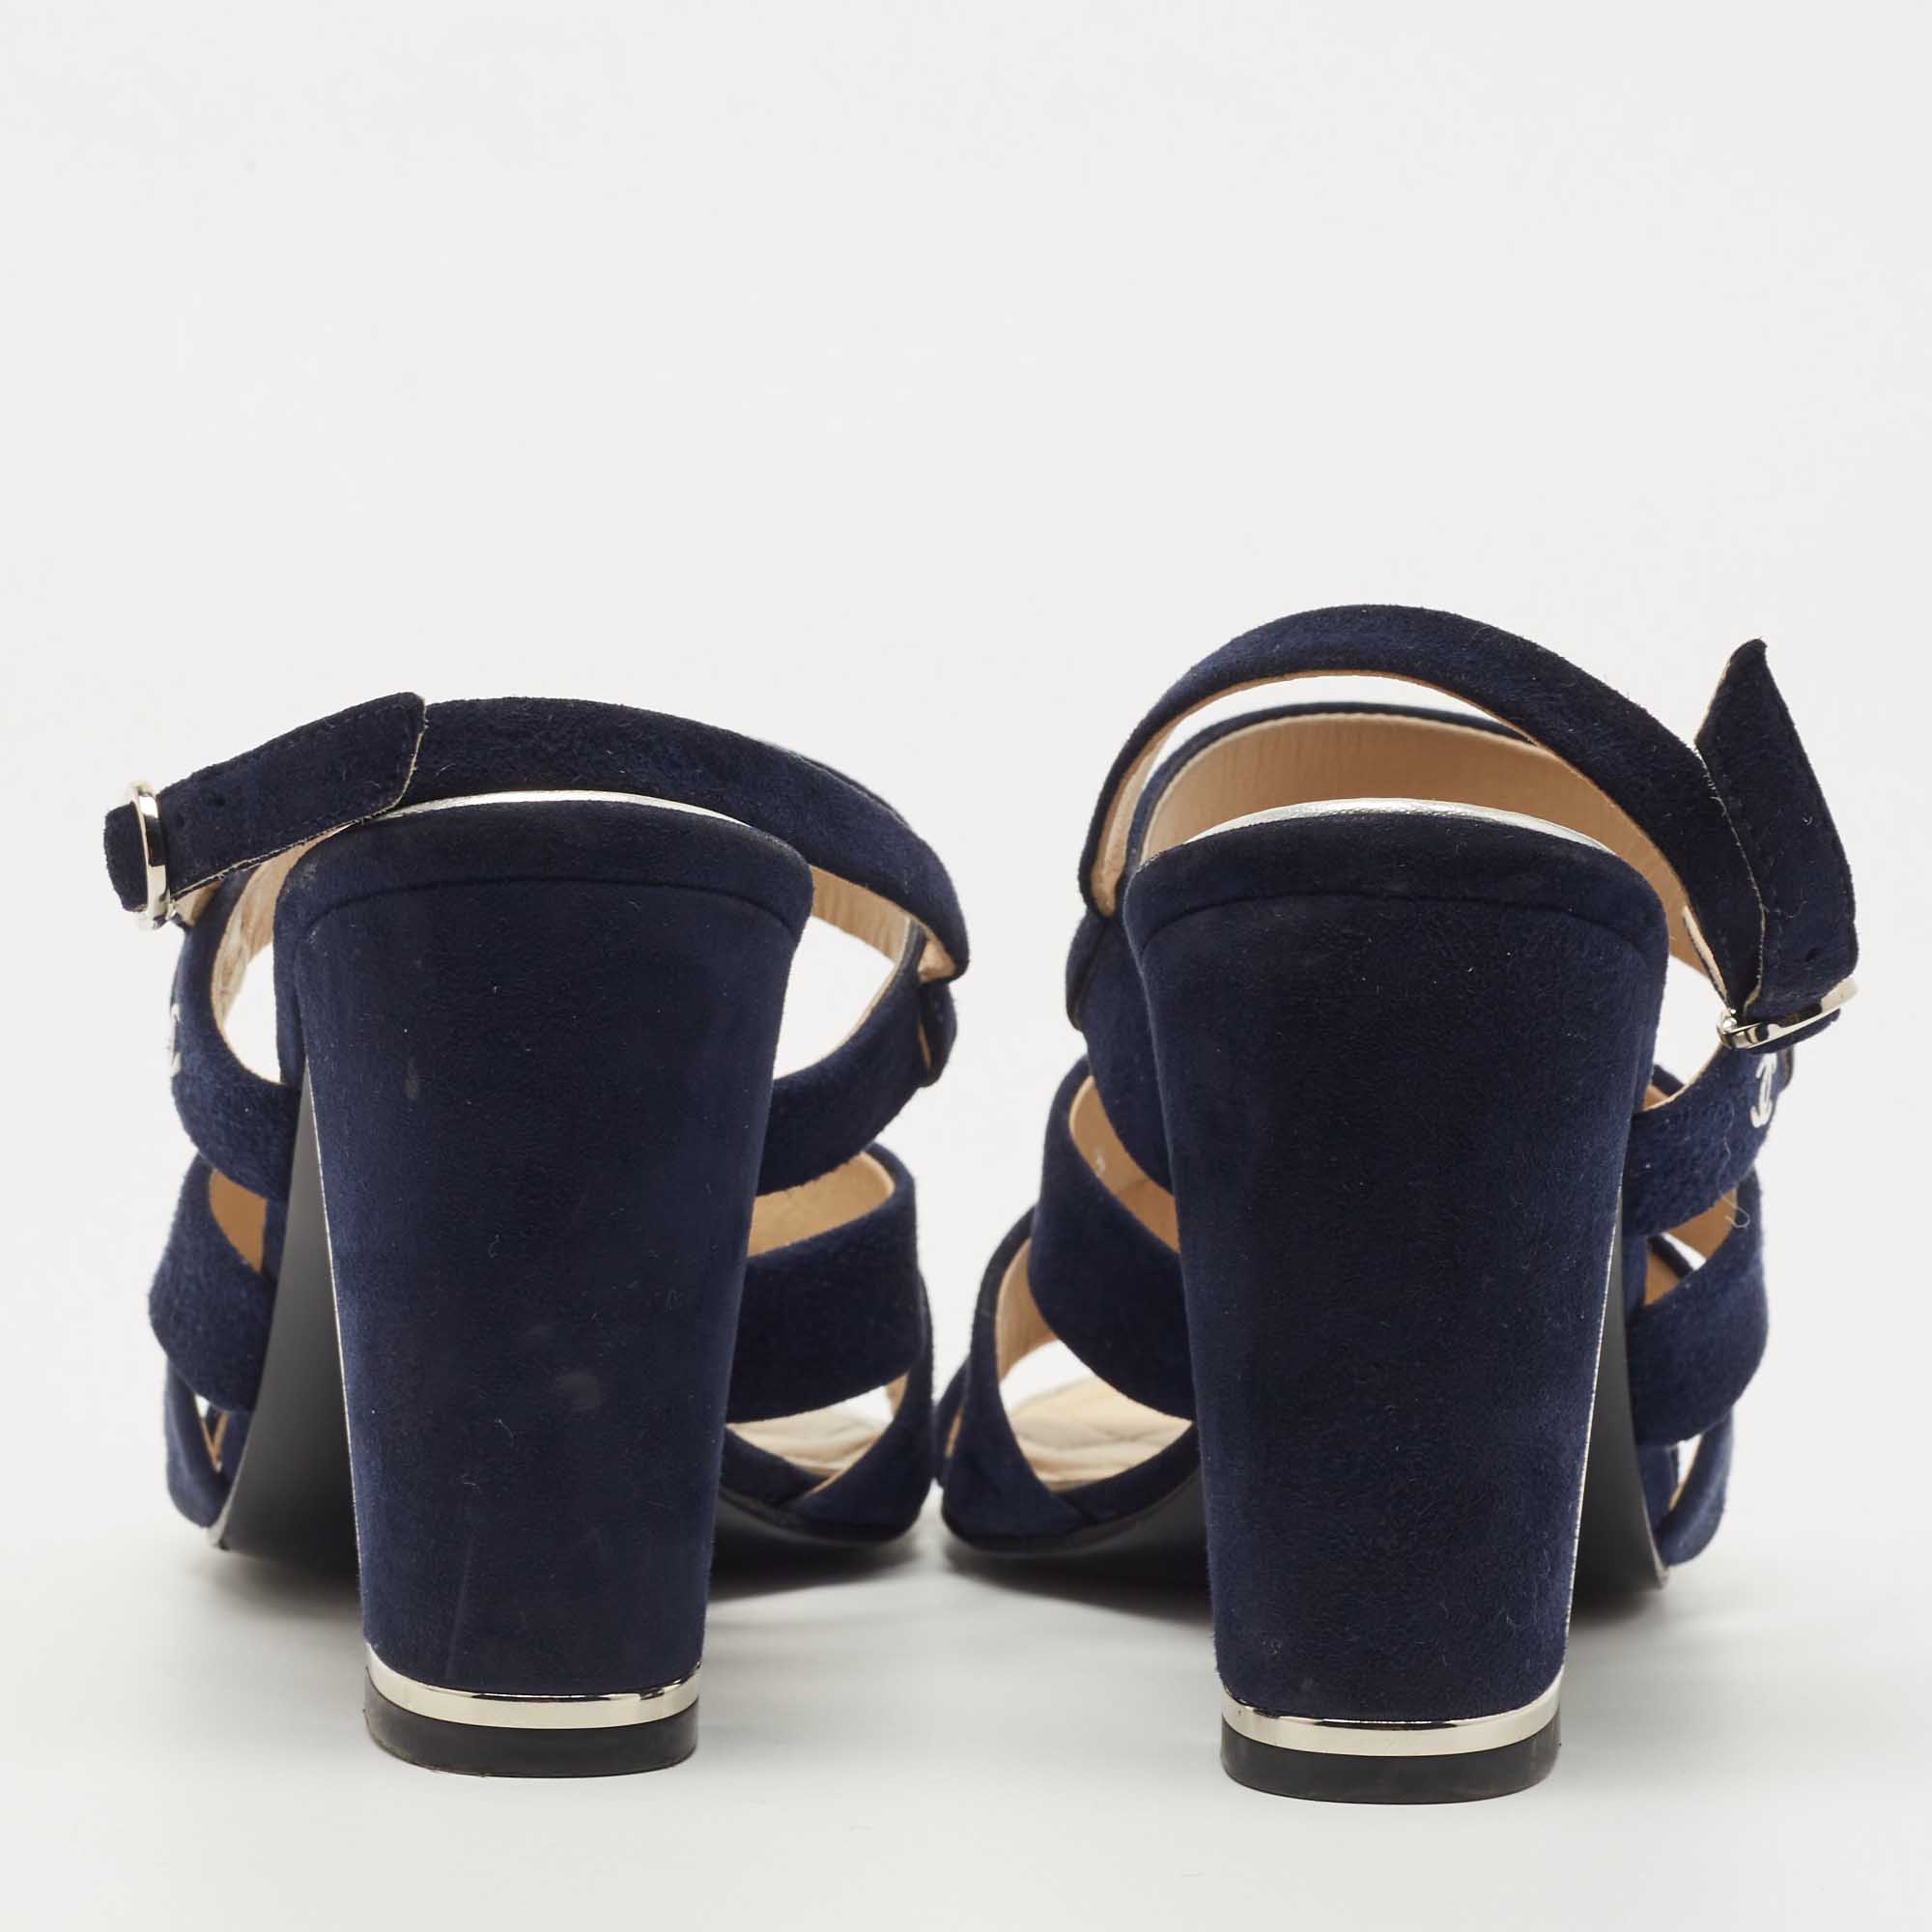 Chanel Navy Blue Suede Block Heel Ankle Strap Sandals Size 38